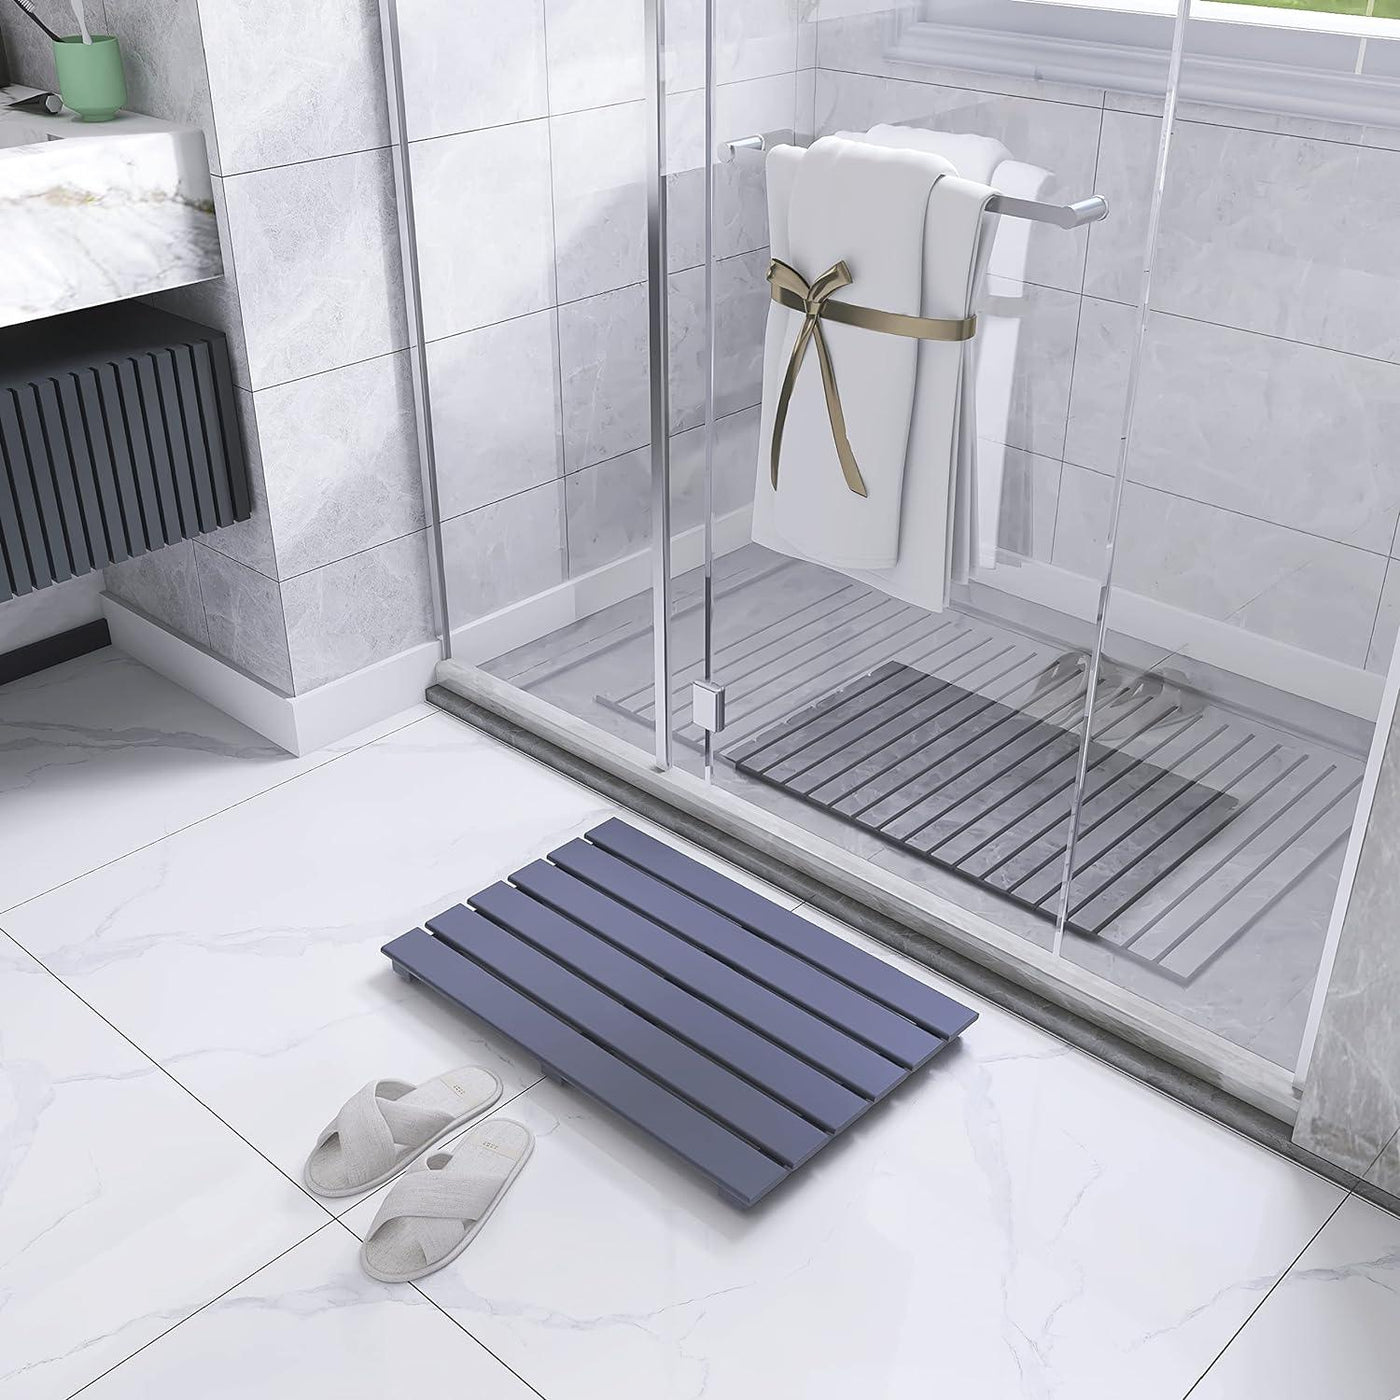 Bamboo Bath Mat, Non-Slip shower floor mat 60X40cm, Grey - Massive Discounts